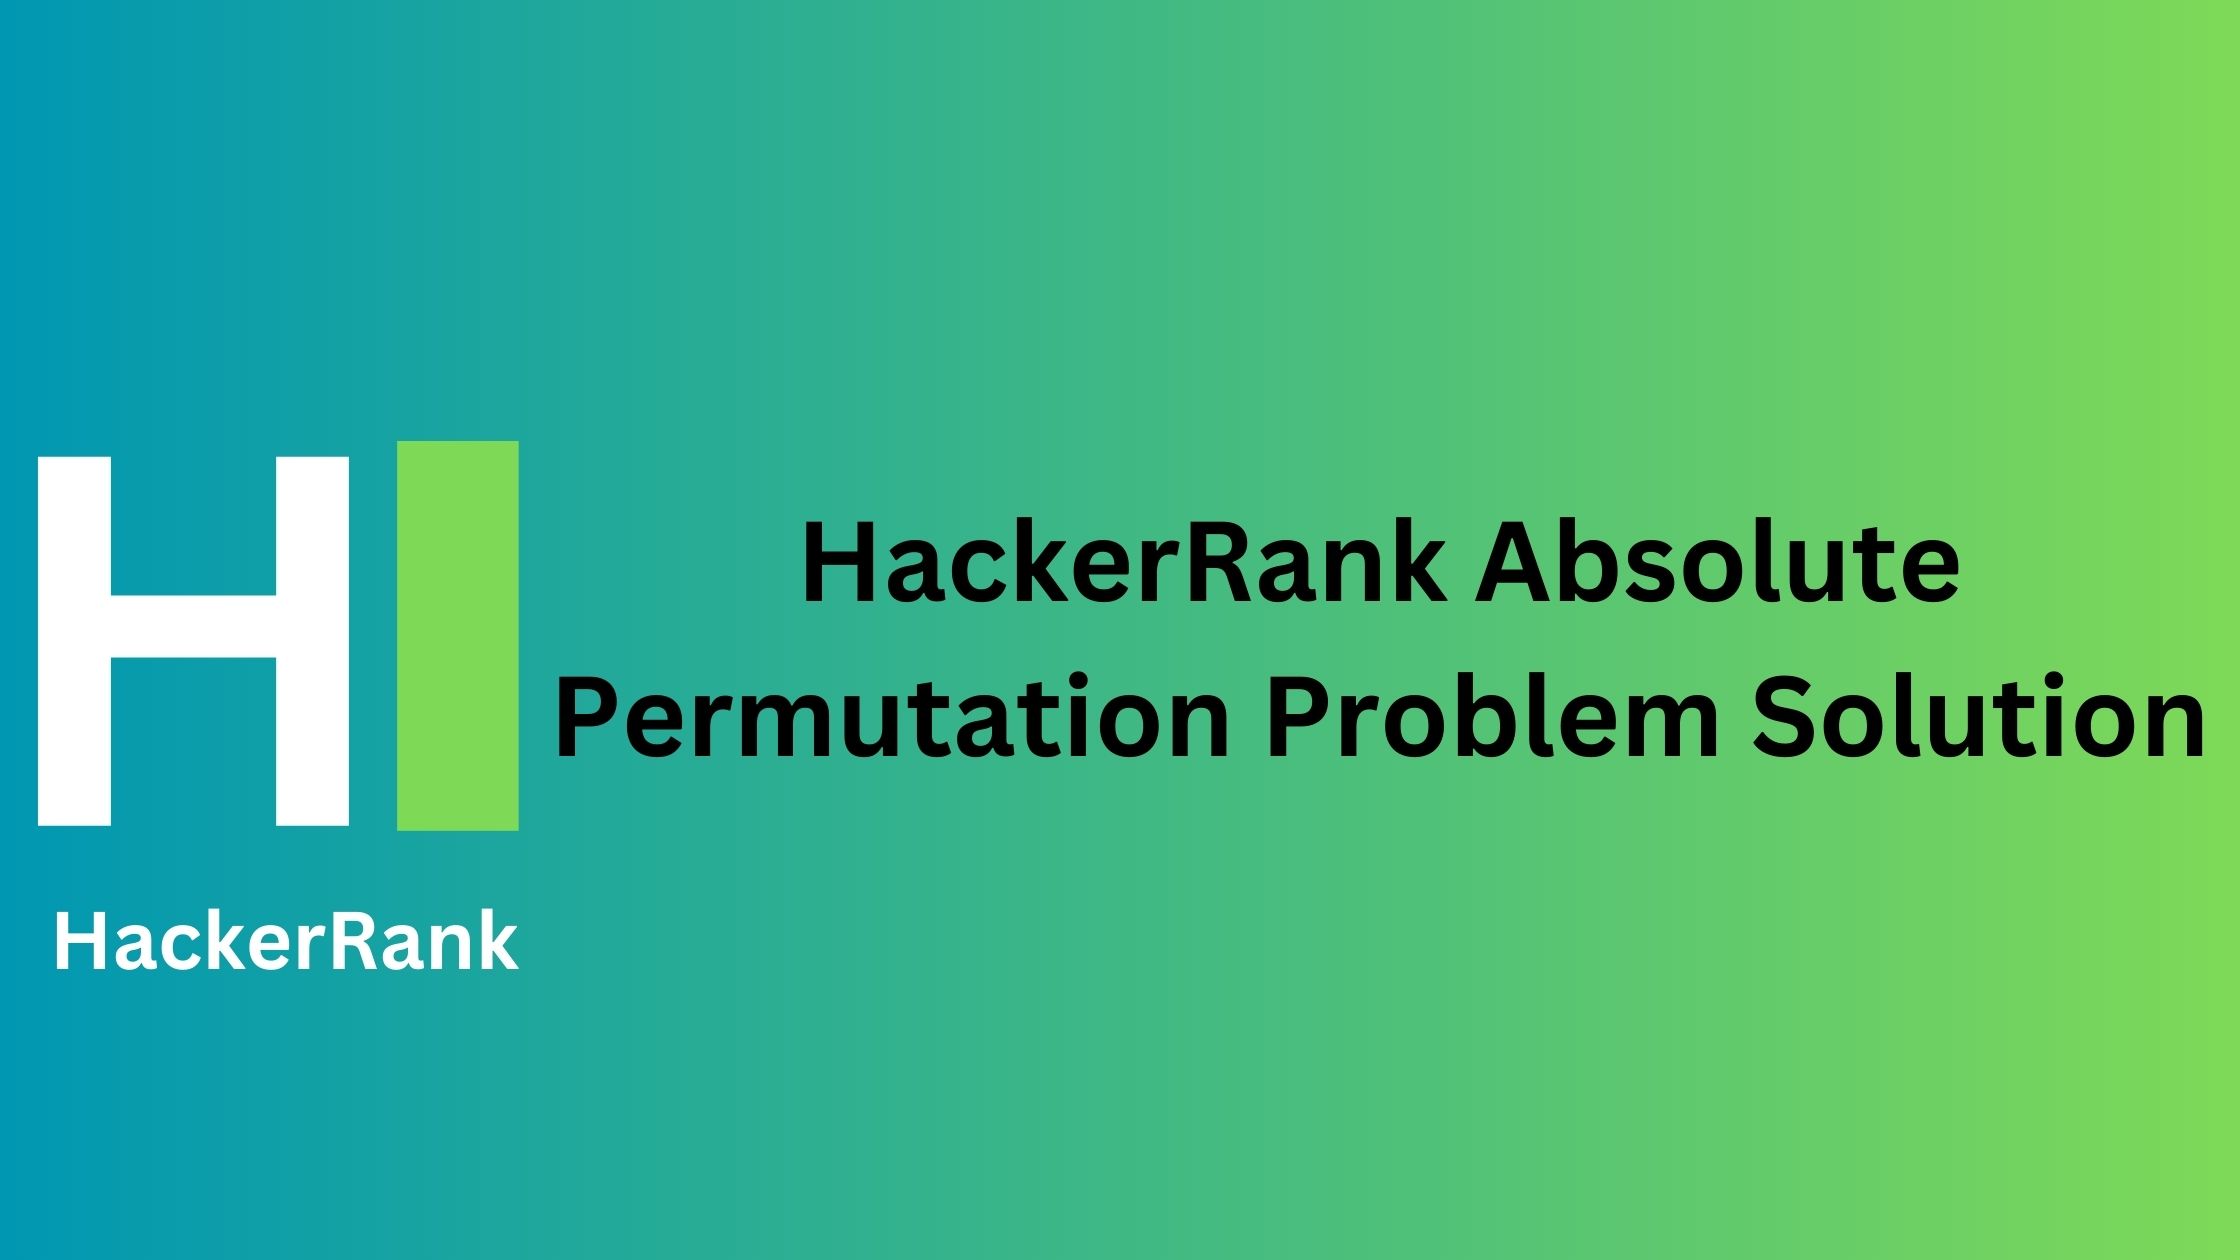 HackerRank Absolute Permutation Problem Solution